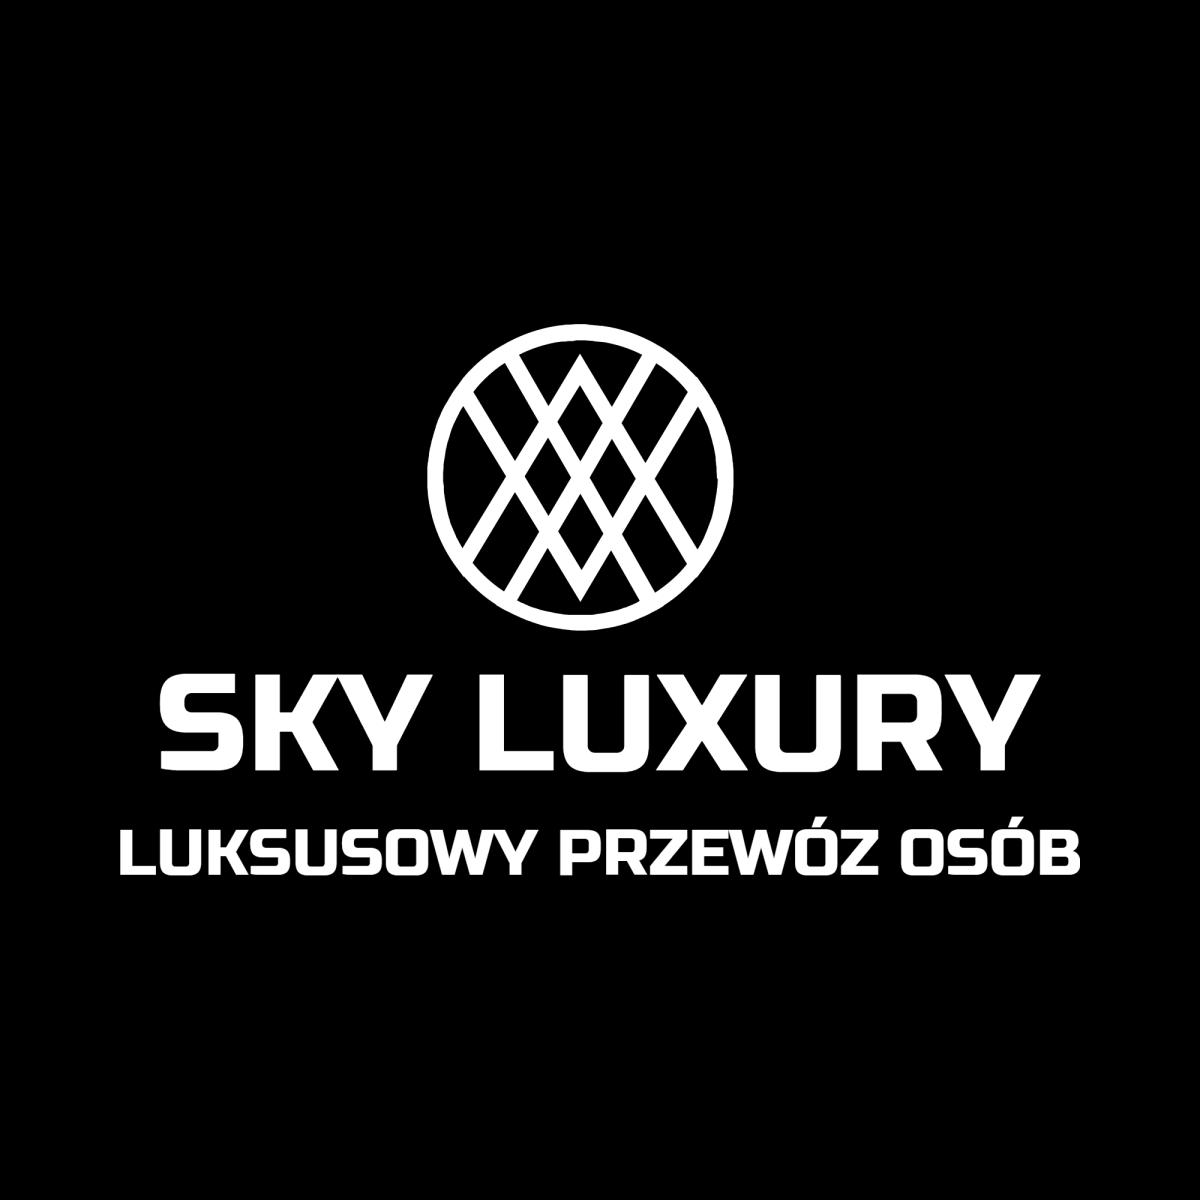 Sky Luxury Polska